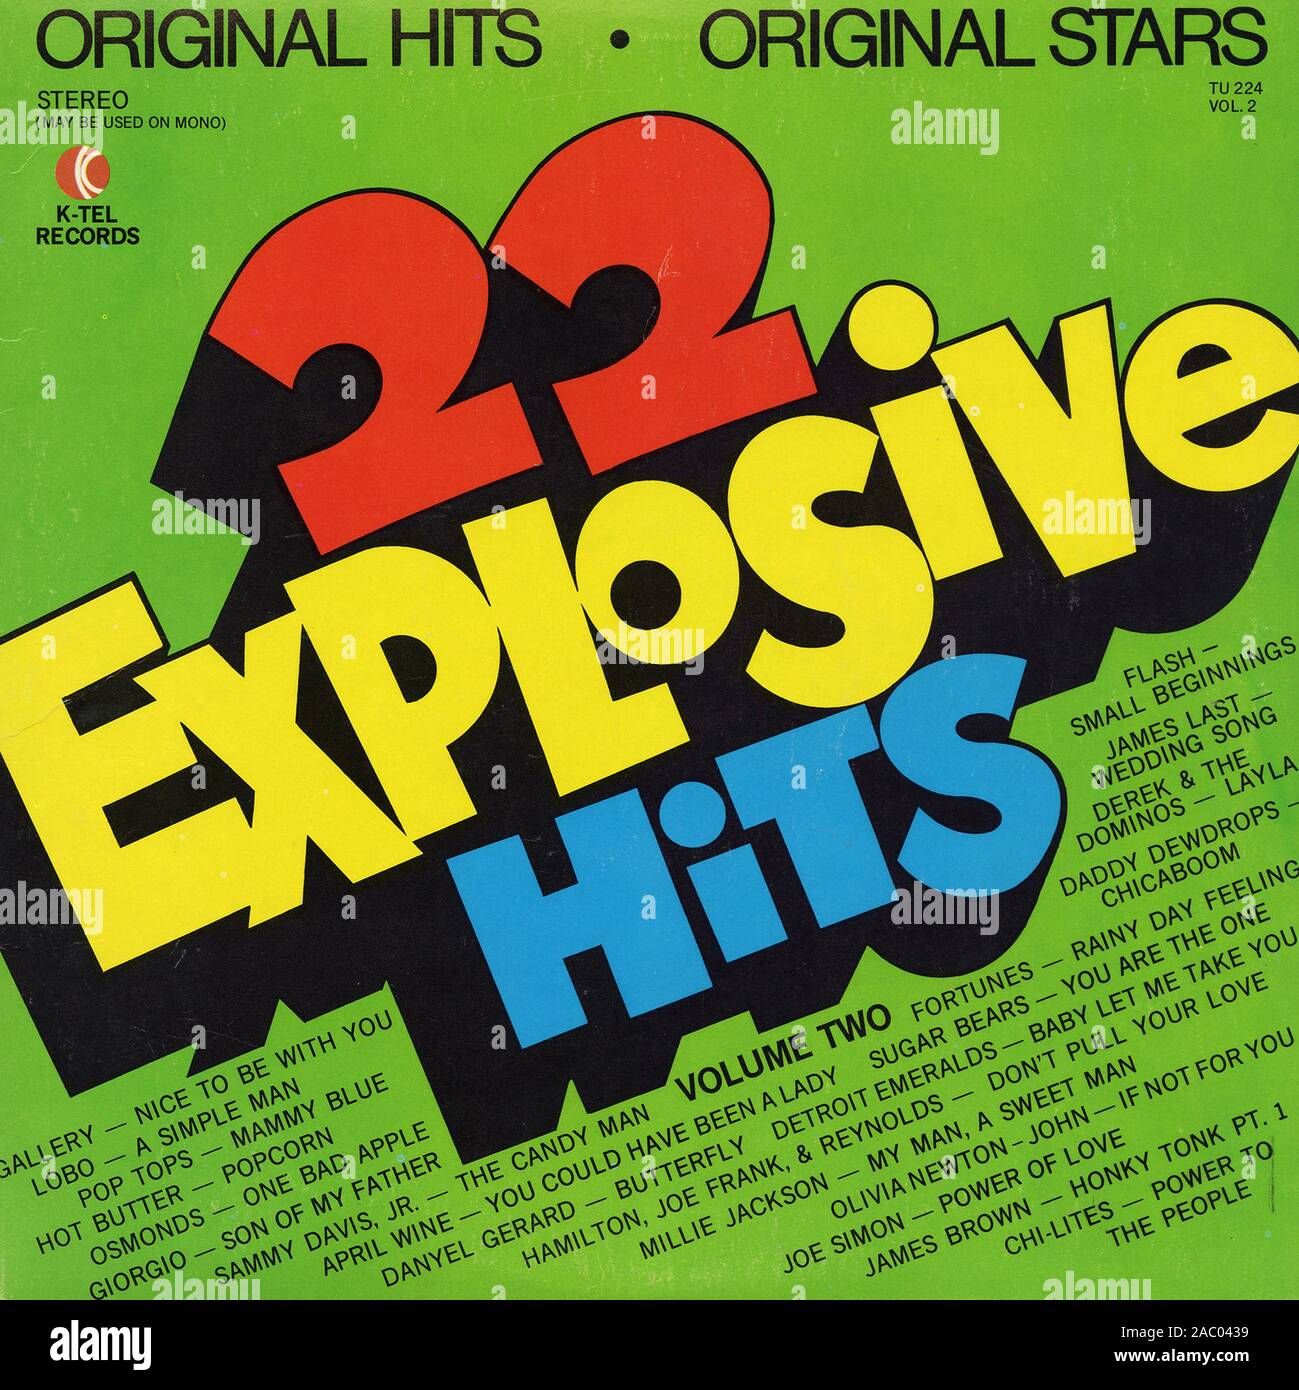 Volume 2 - 22 Explosive Hits - Vintage vinyl album cover Stock Photo